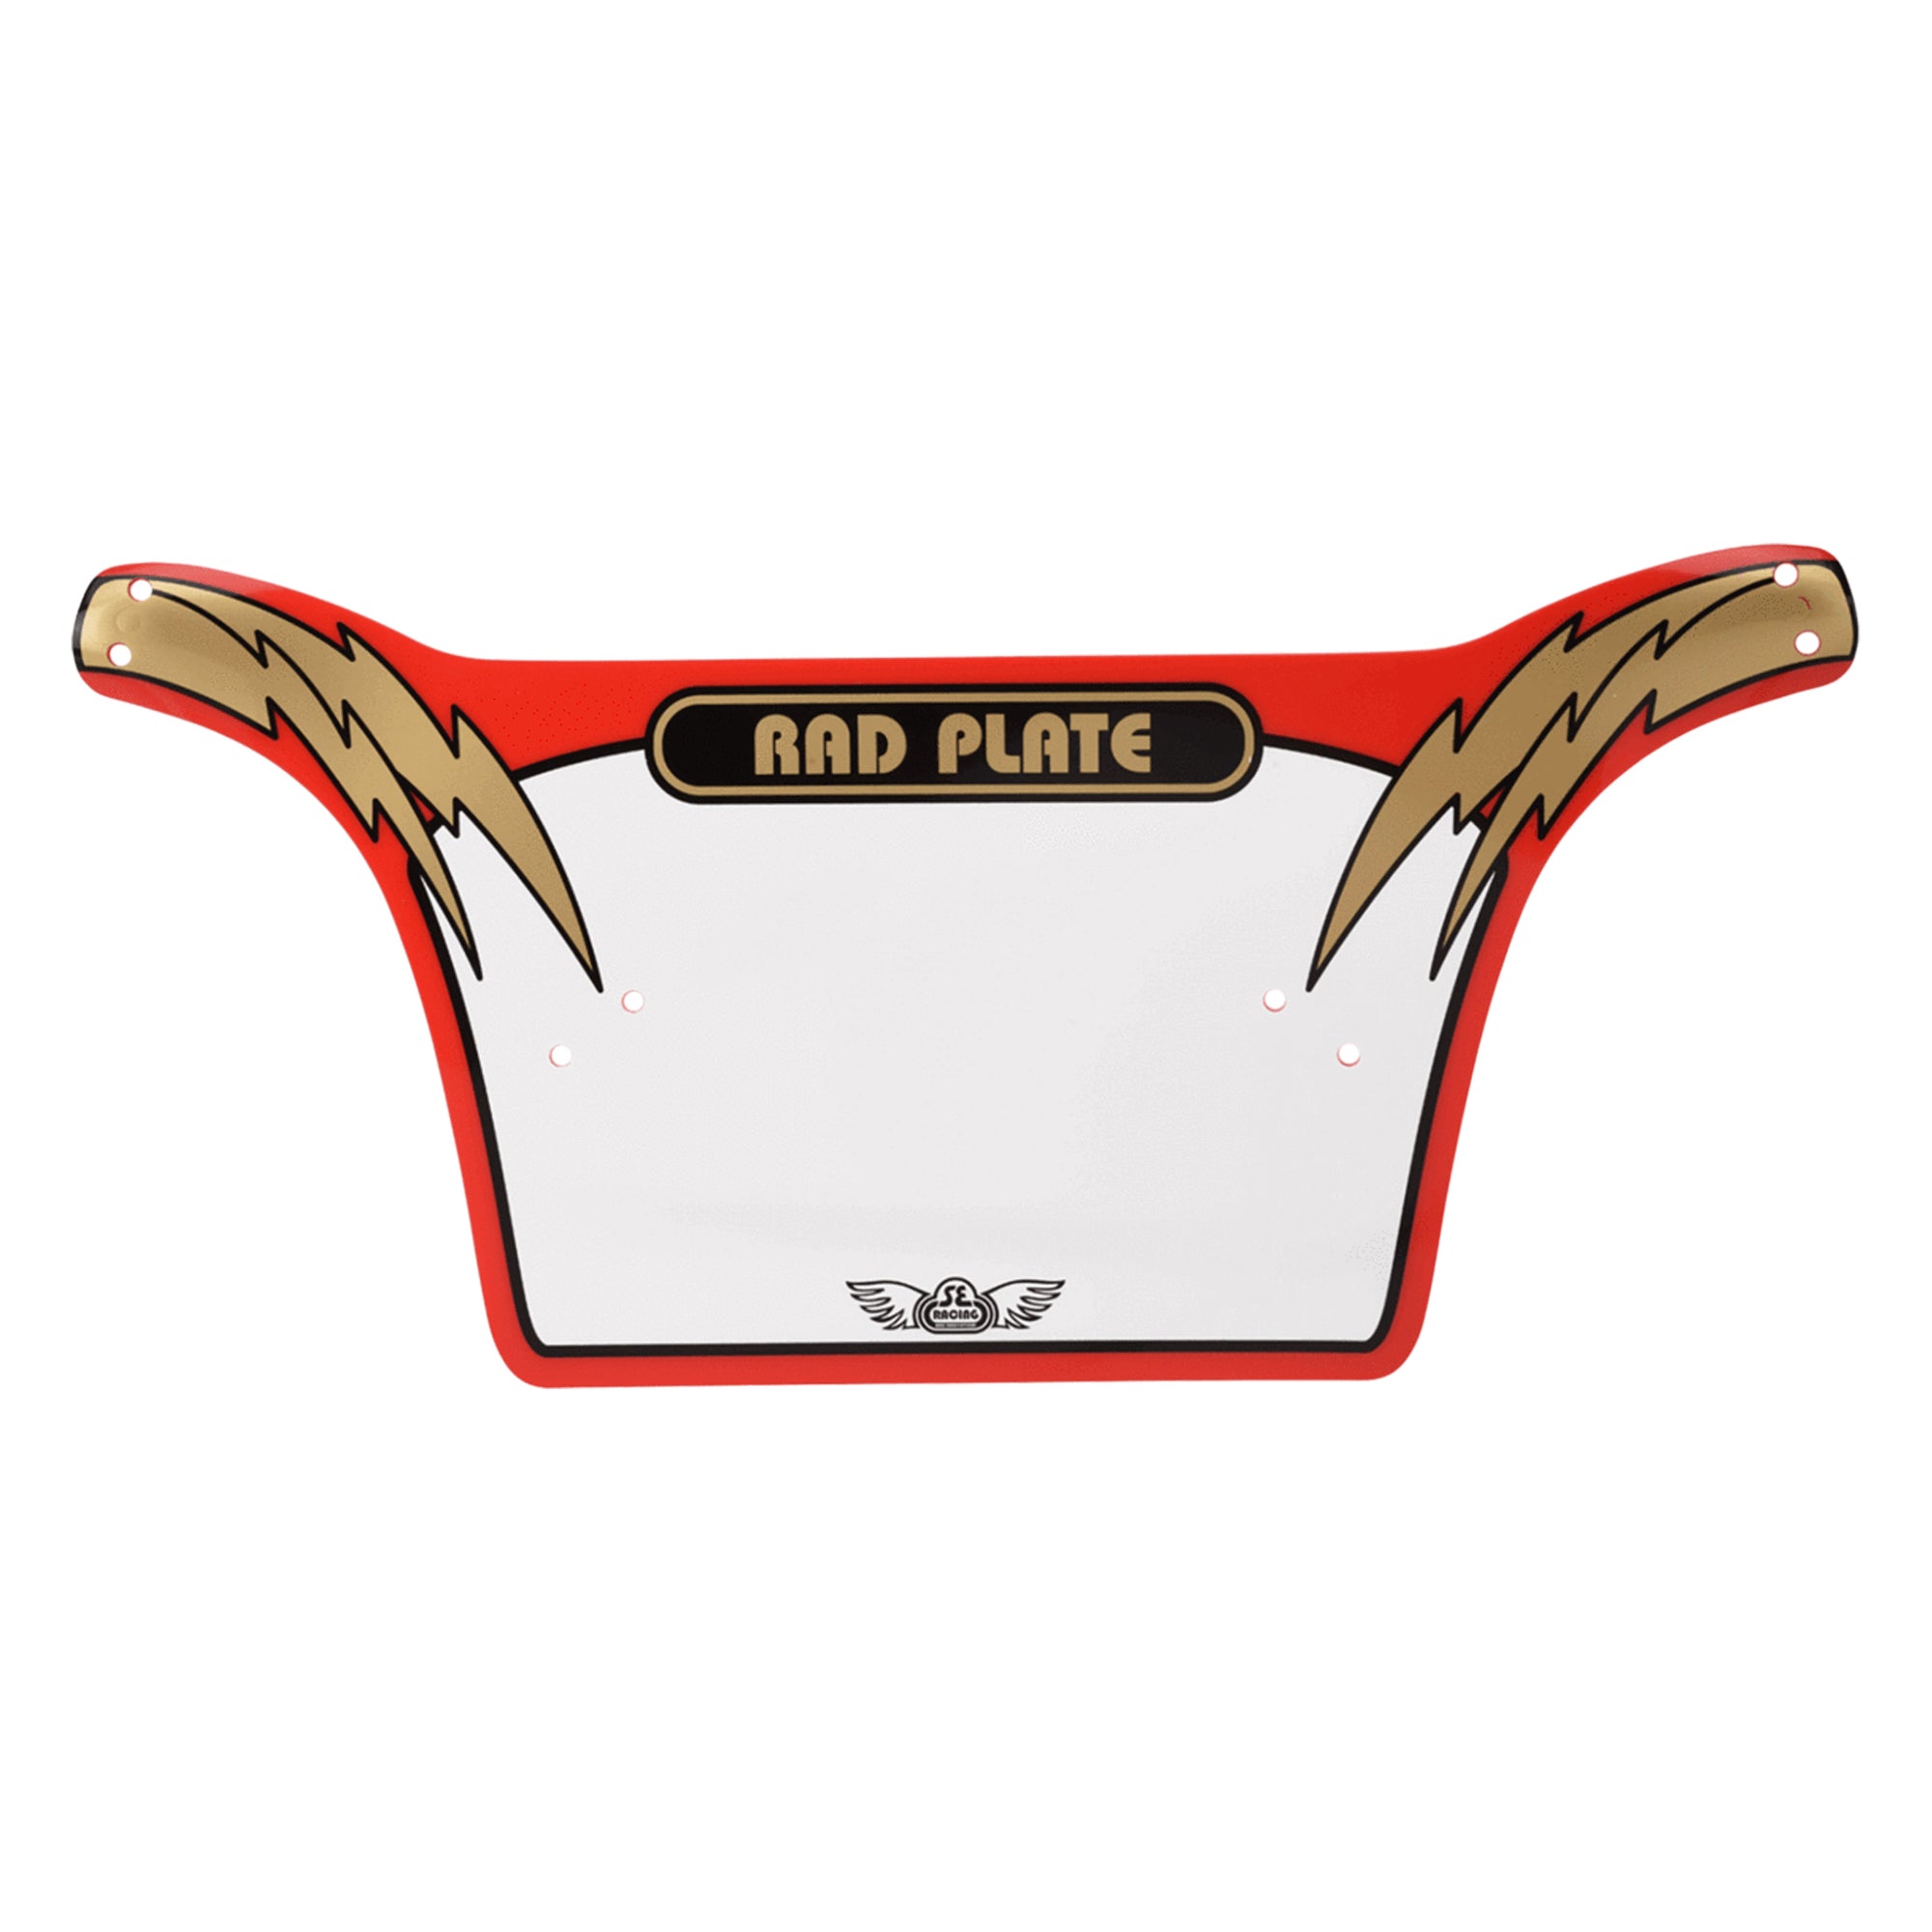 SE Racing "Rad" BMX Number Plate - Red/Gold